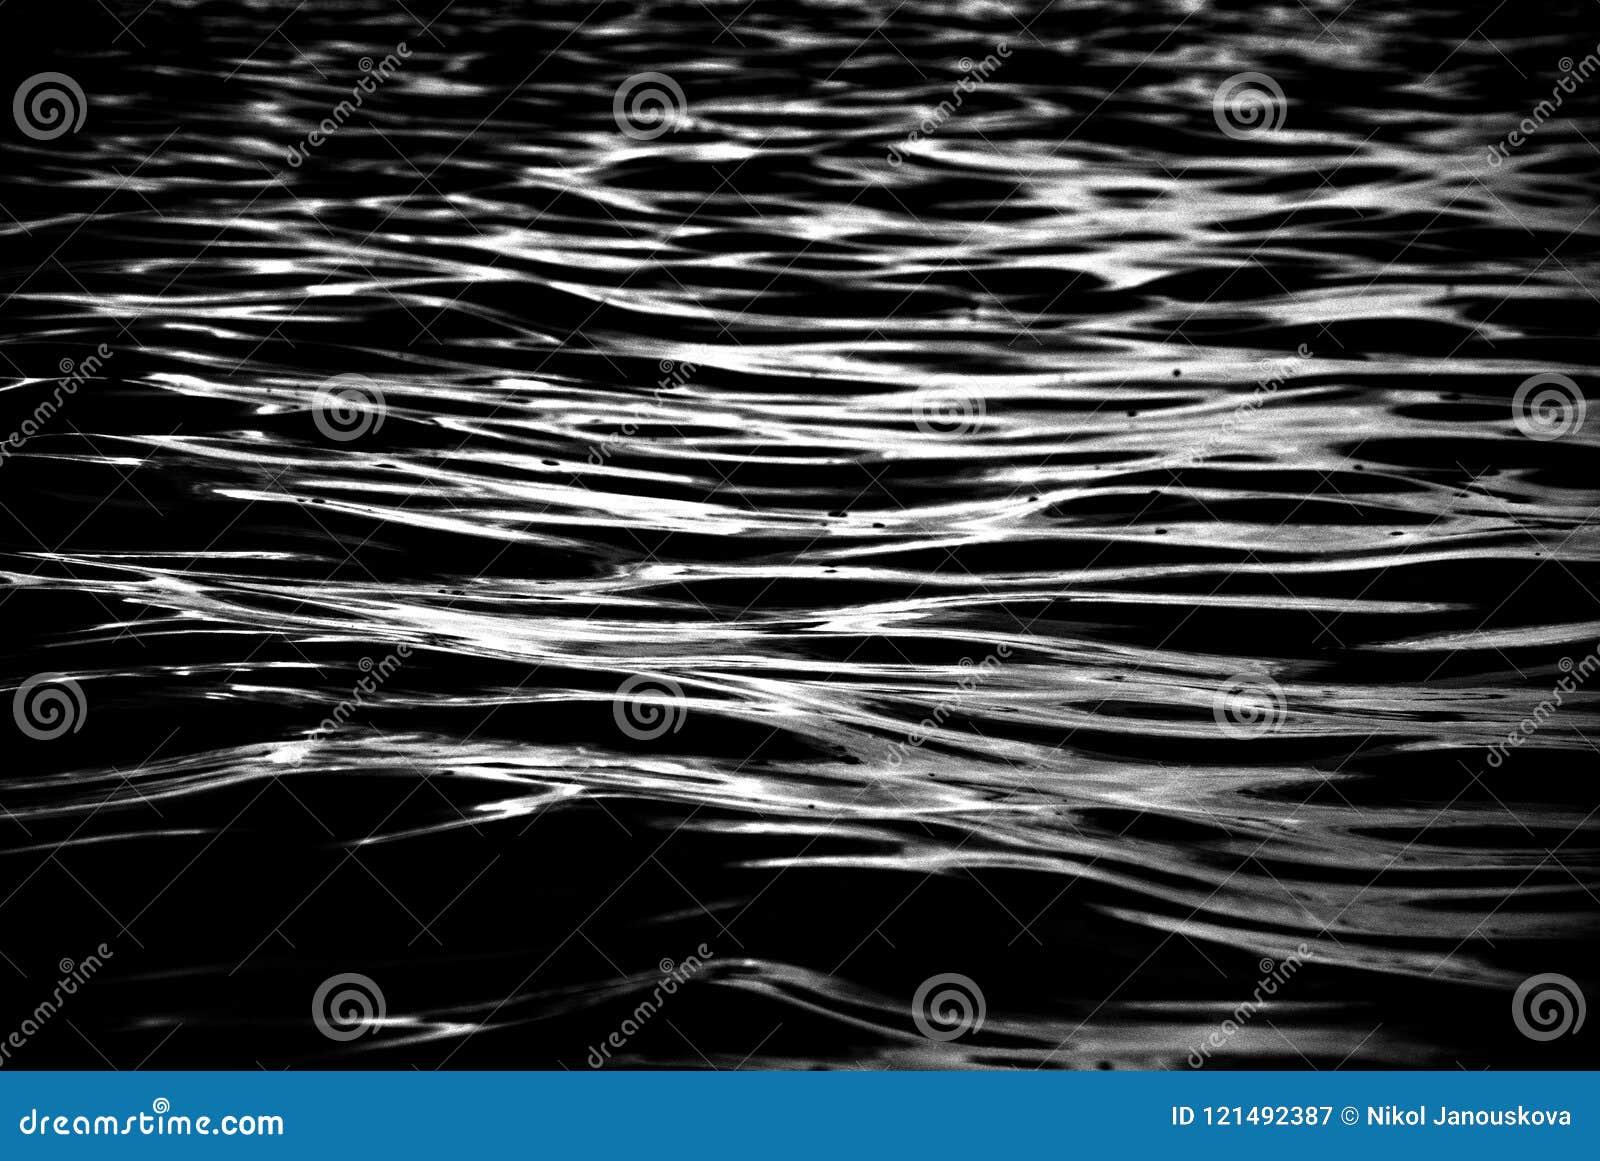 Sea Ocean B&W Black White Water Waves Abstract Wallpaper Stock Image -  Image of pattern, lake: 121492387